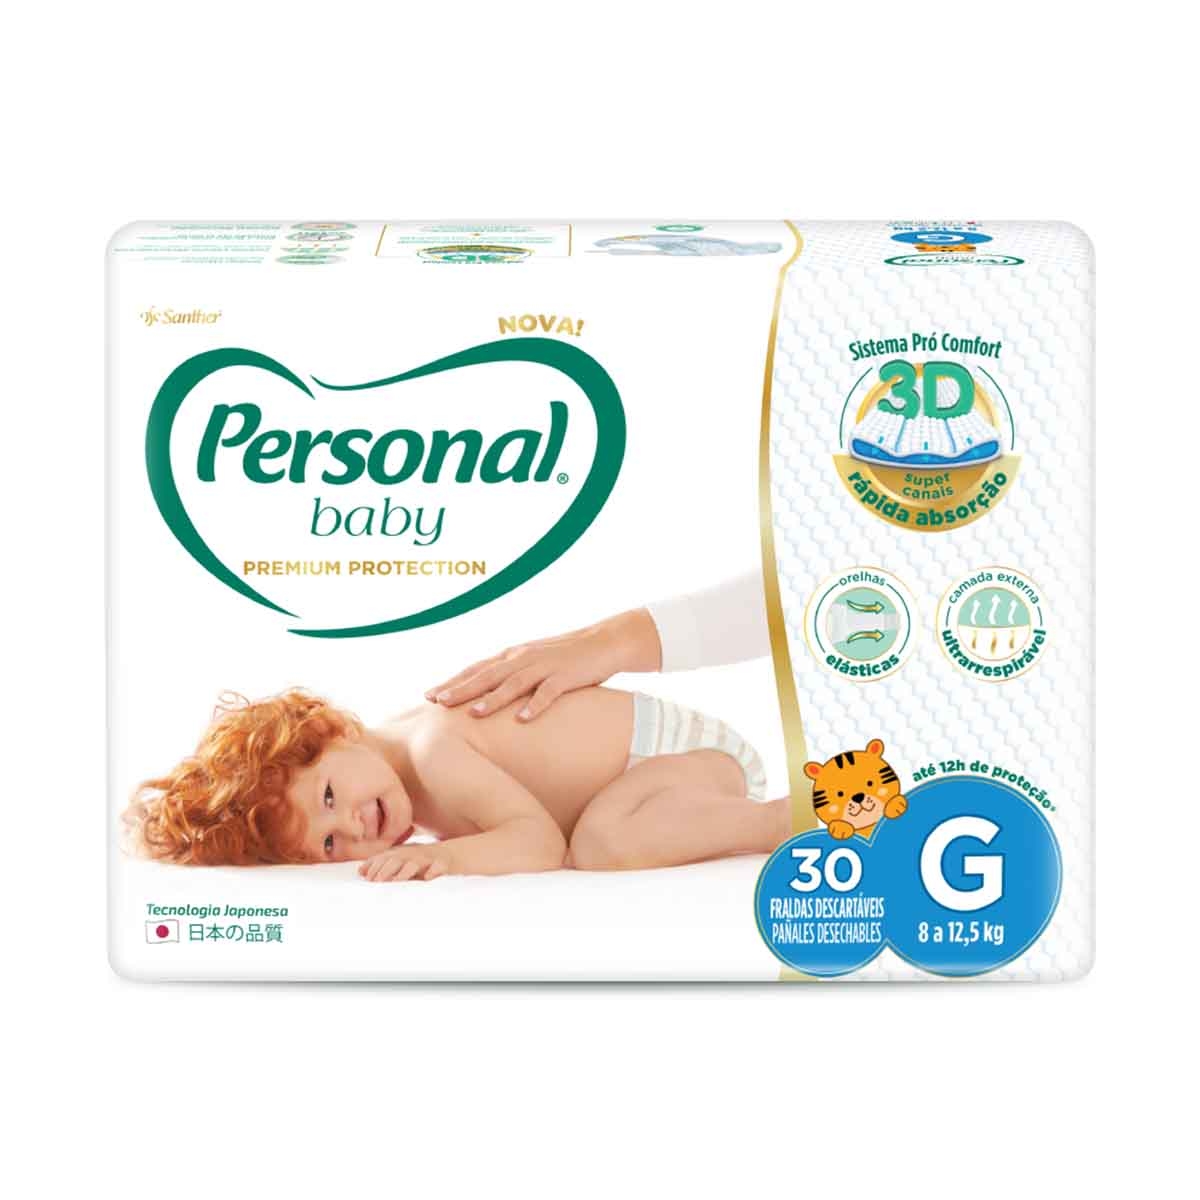 https://img.drogaraia.com.br/media/catalog/product/f/r/fralda-personal-baby-premium-protection-g-30-unidades.jpg